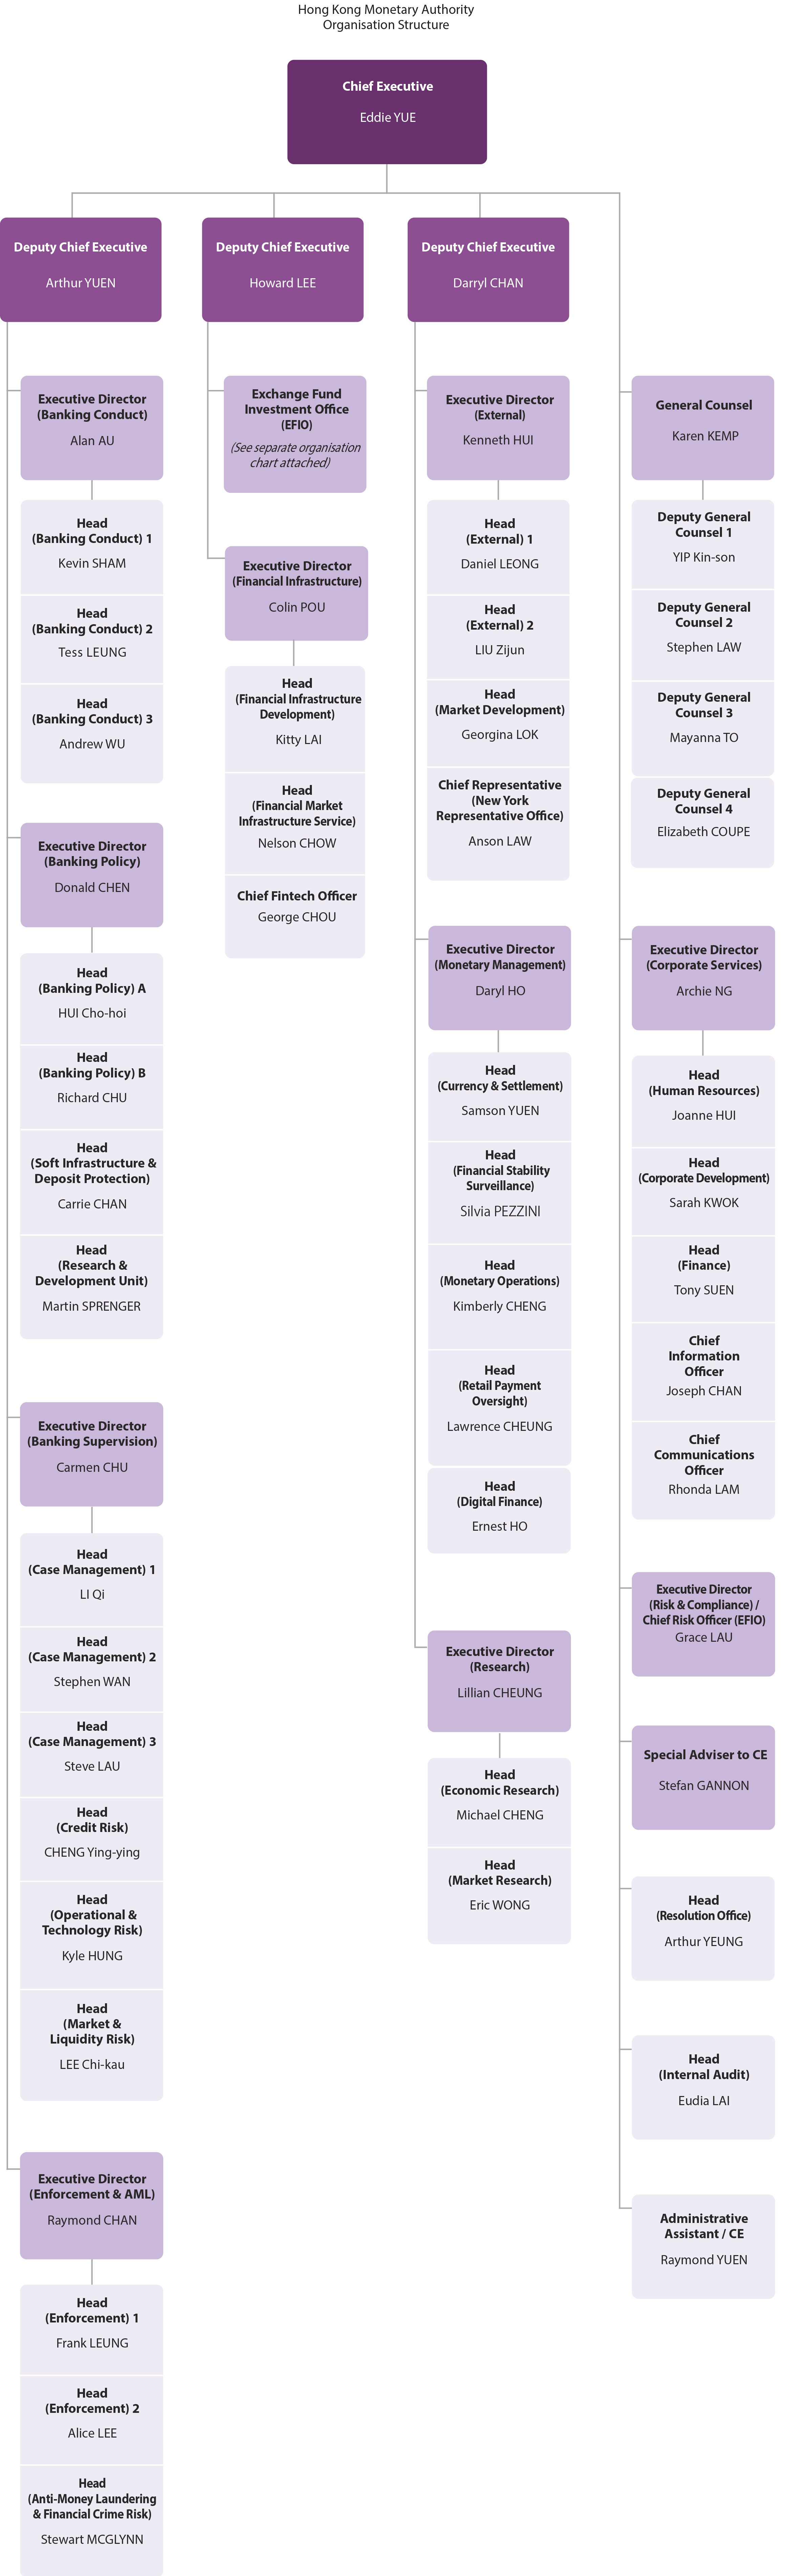 Organisation Chart
